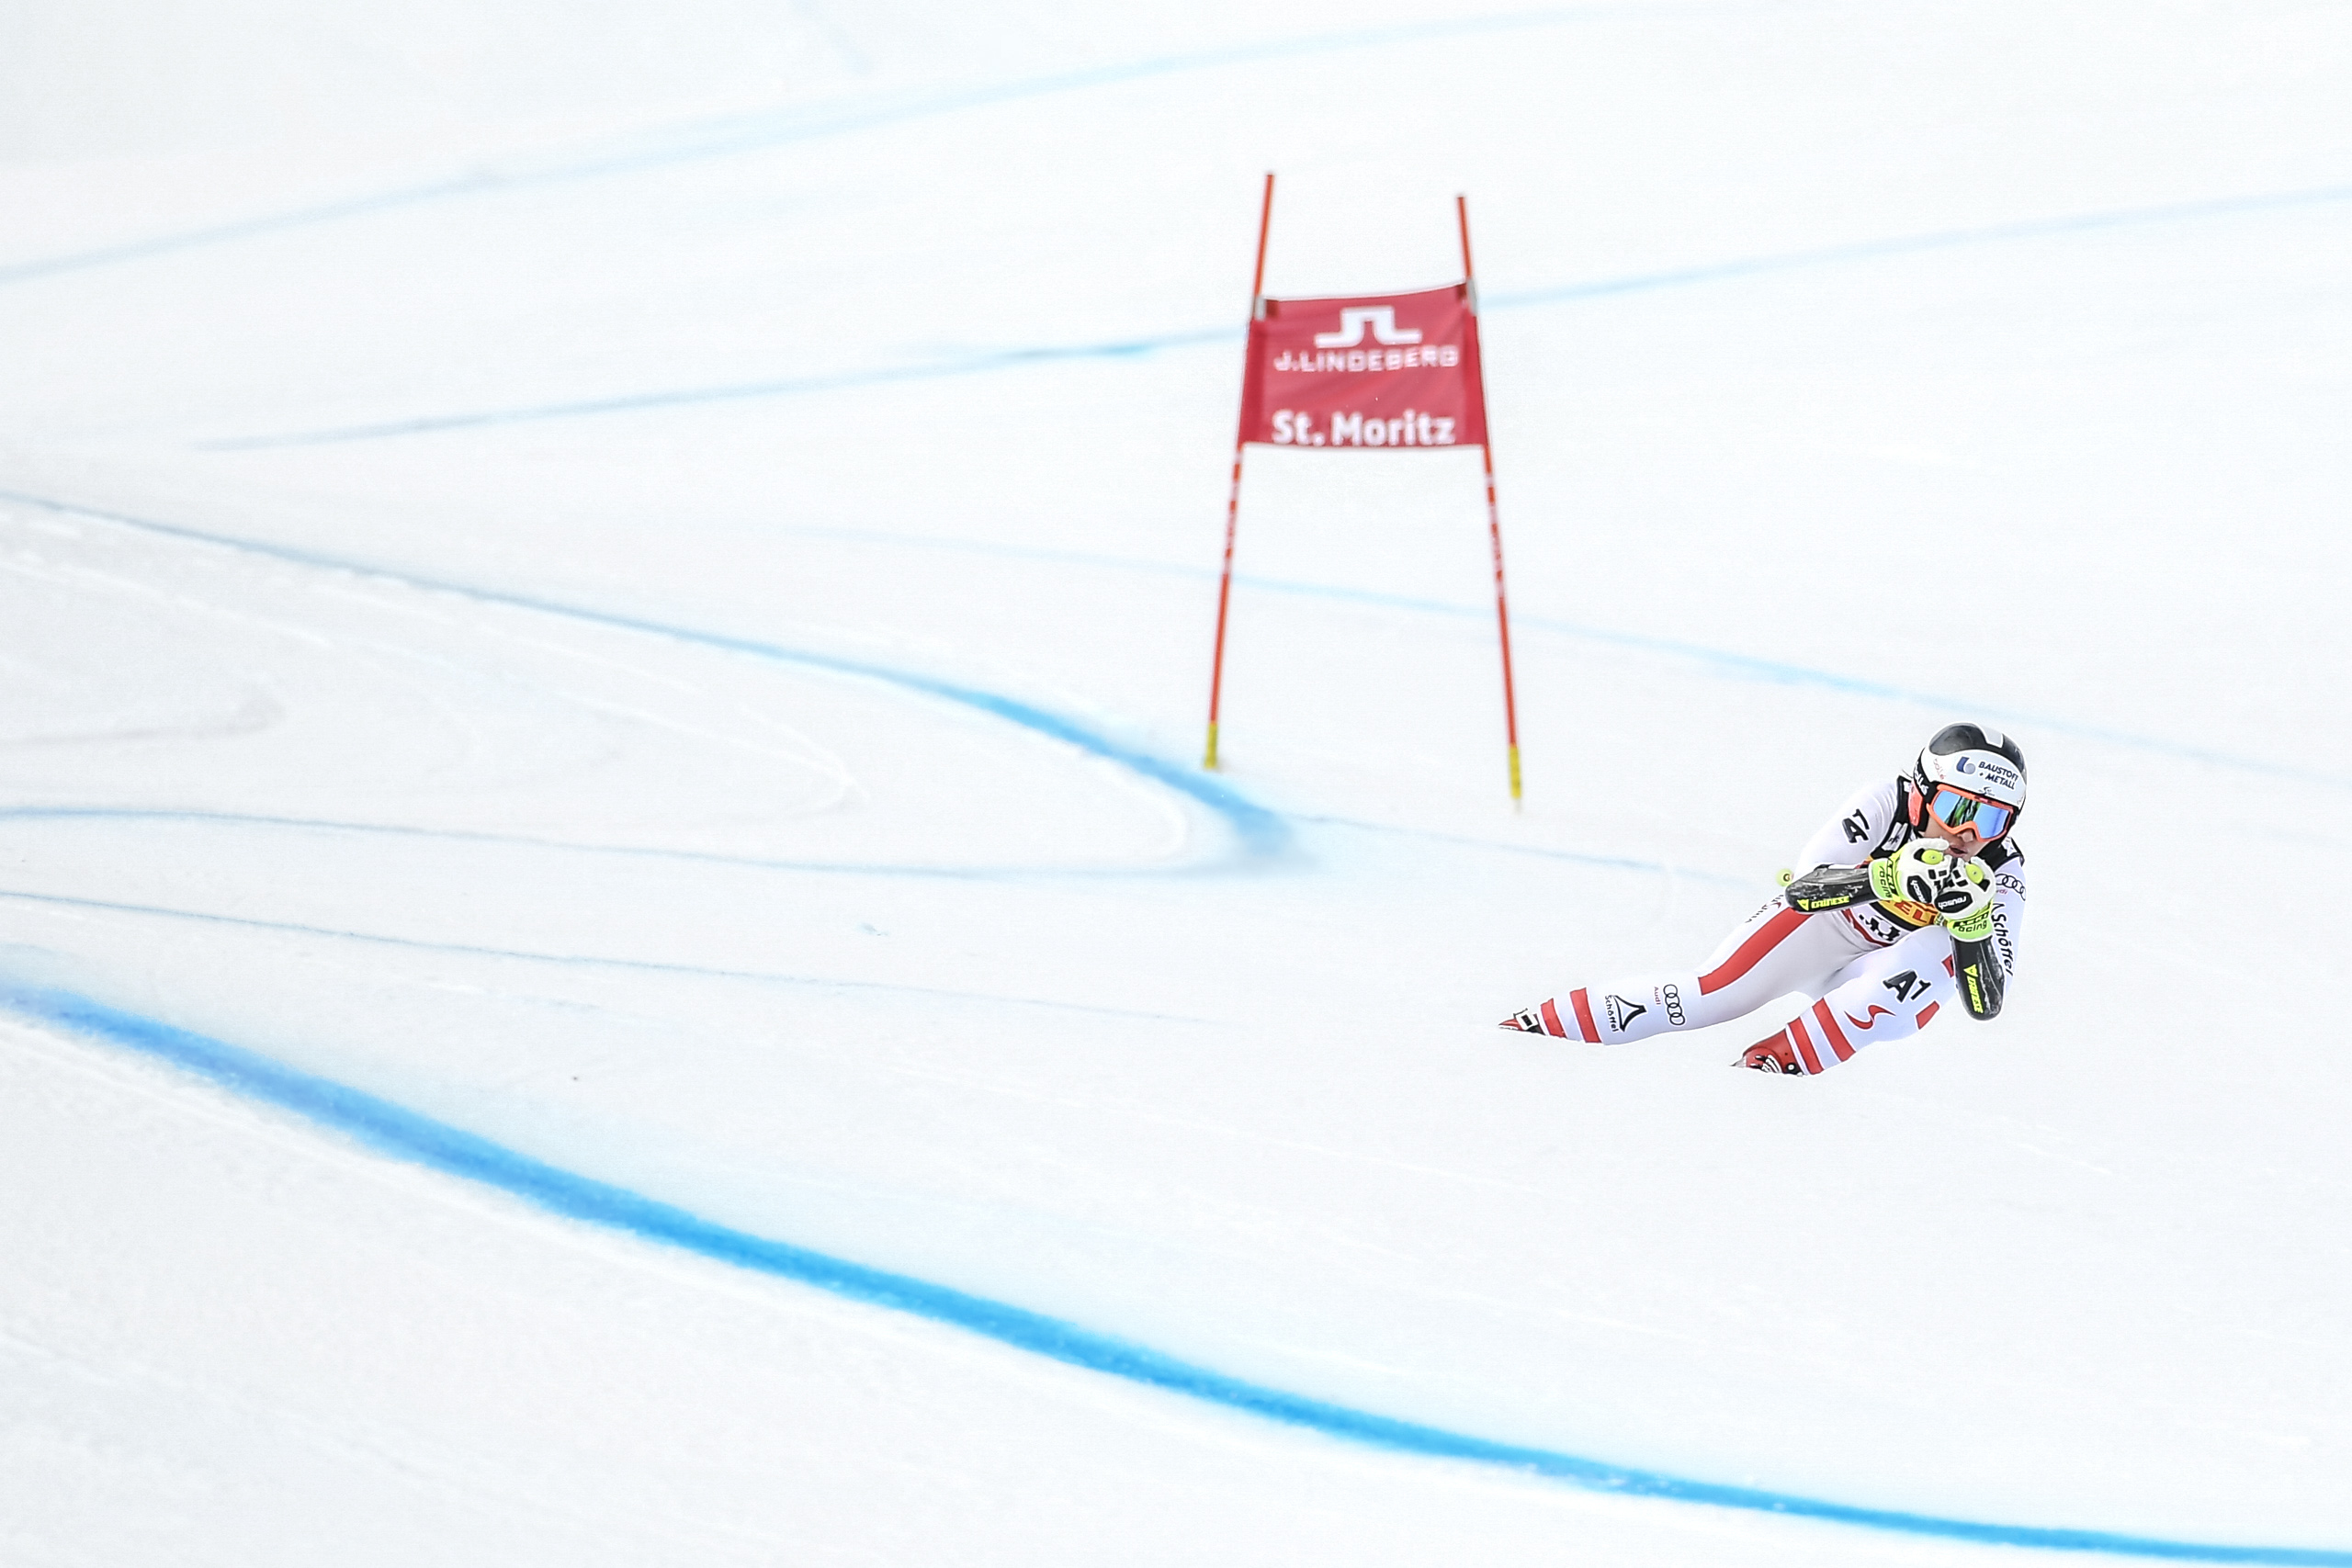 ST MORITZ - February 7, 2017: Stephanie VENIER (AUT) competing in the women's Super G event at the FIS Alpine World Ski Championships at St Moritz, Switzerland. 20170207_SLB_3595